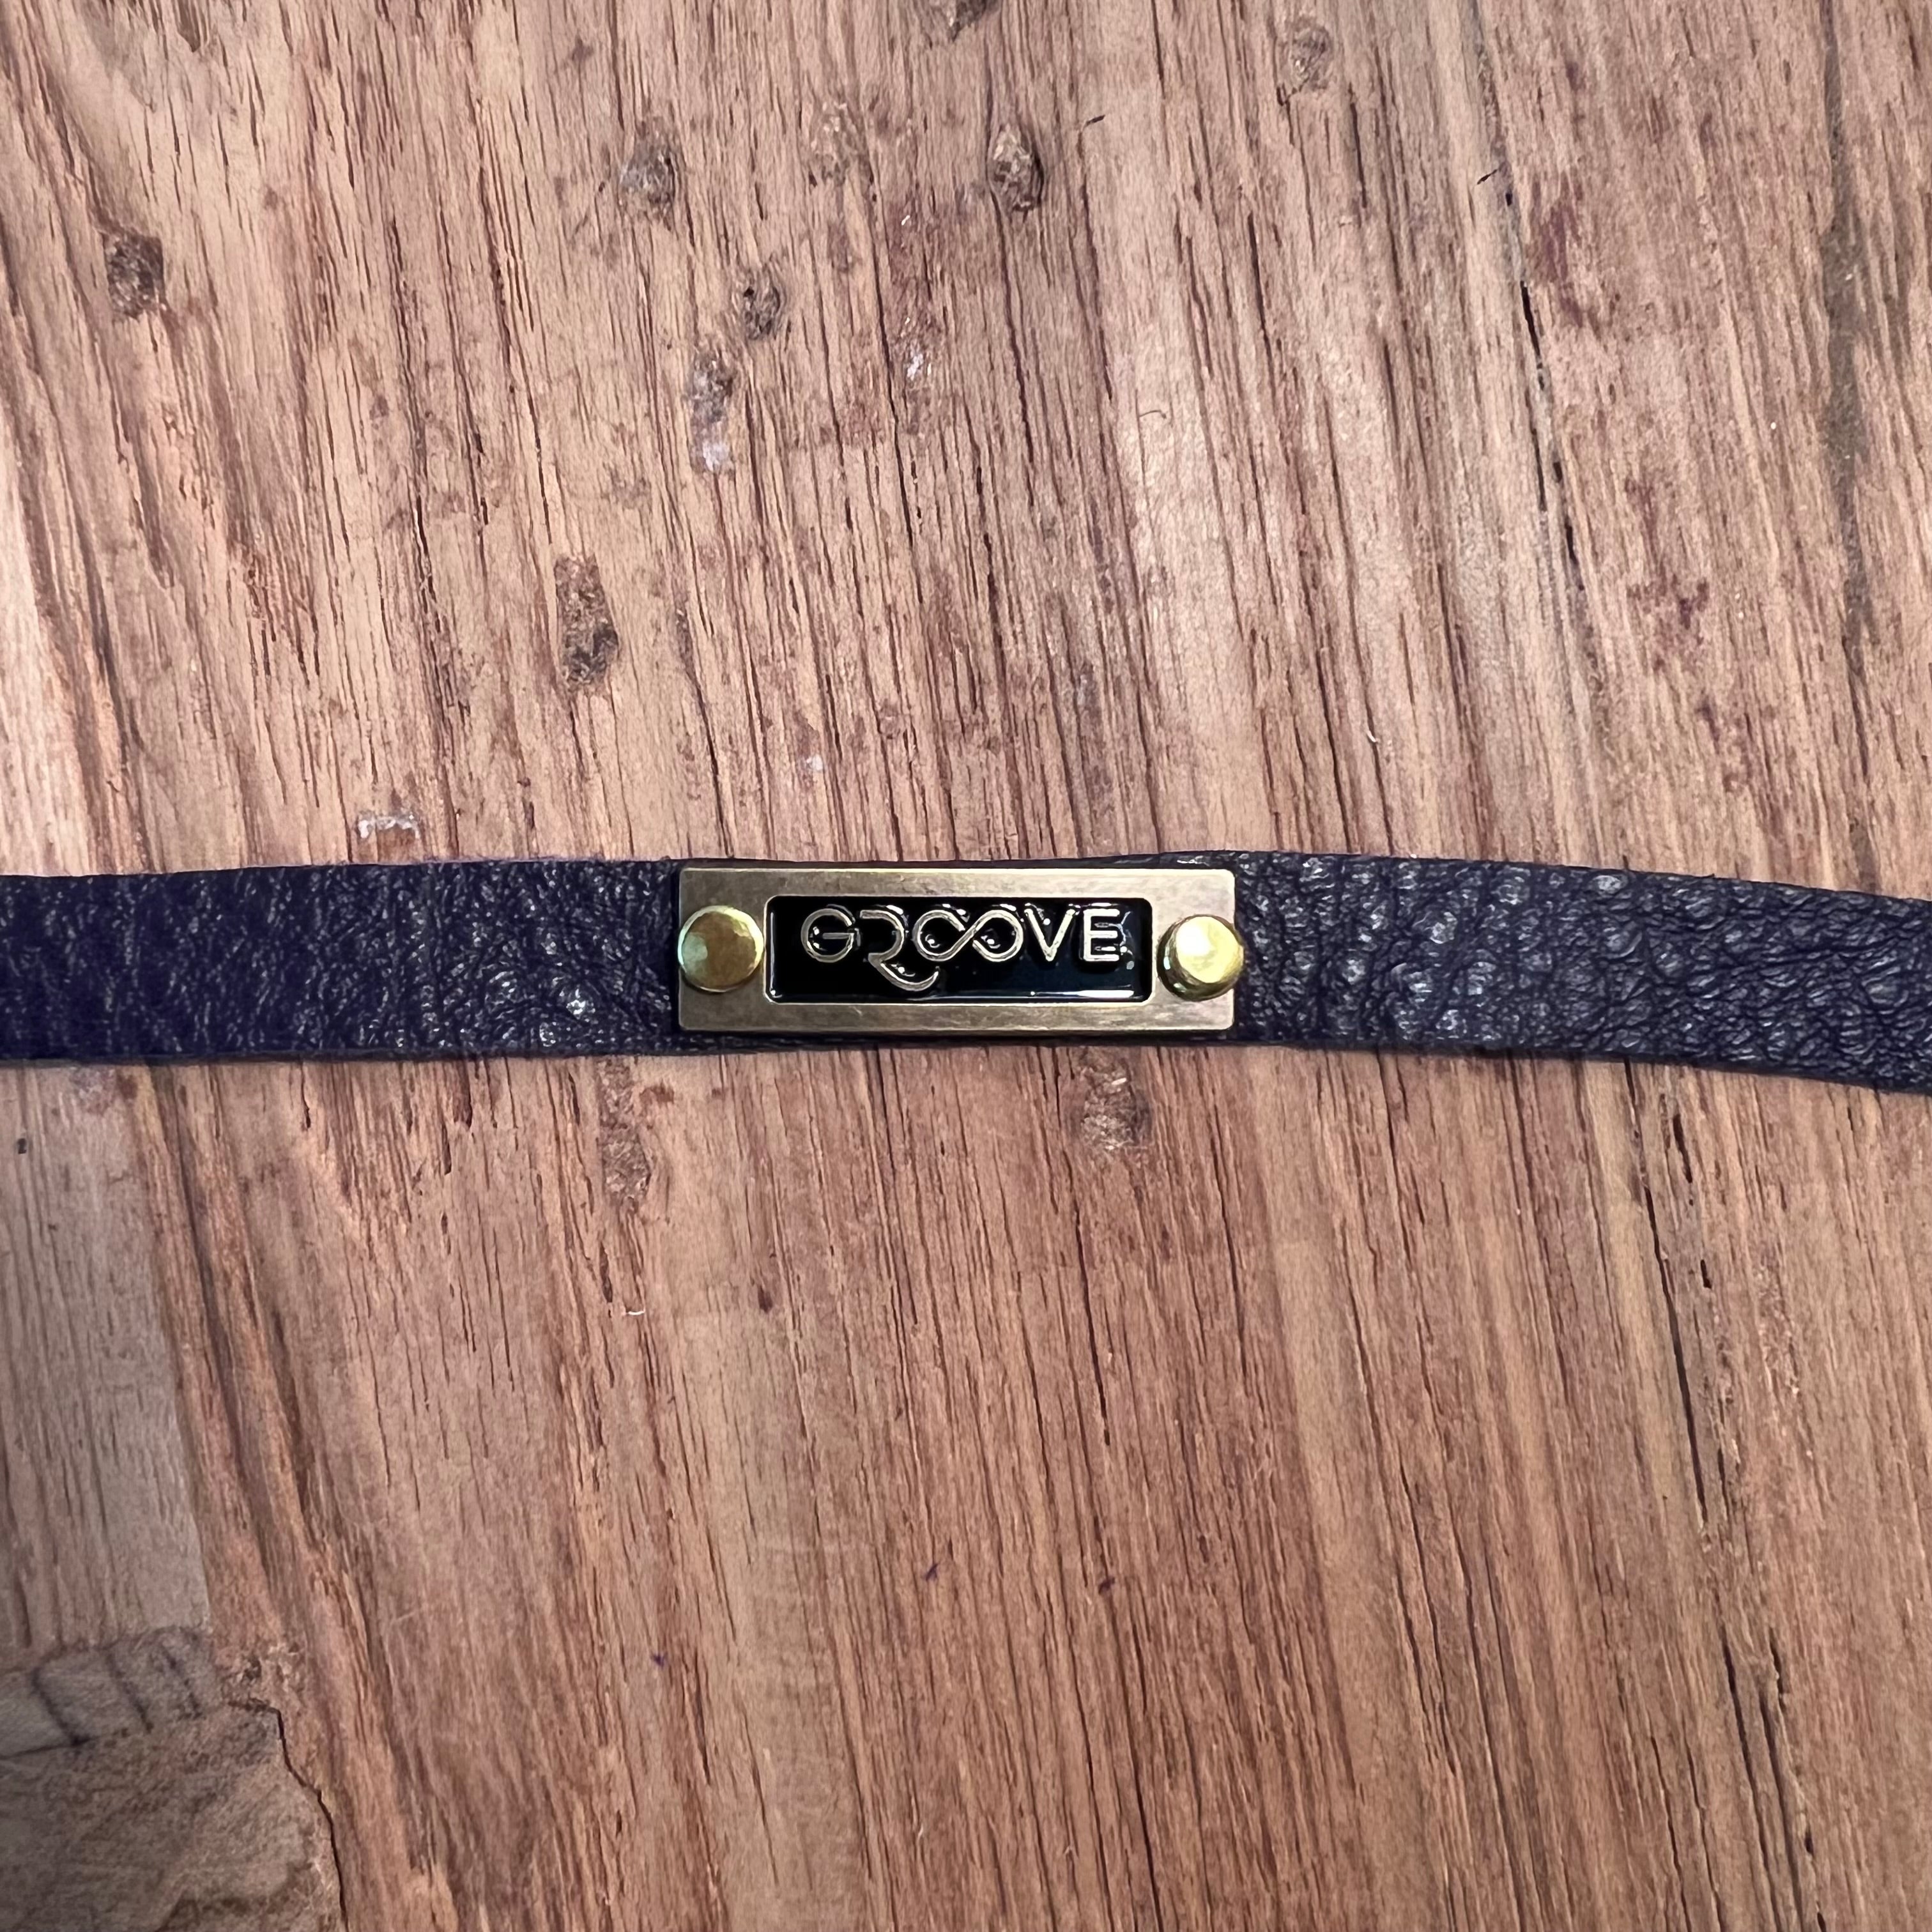 Groove Logo Leather Bracelet